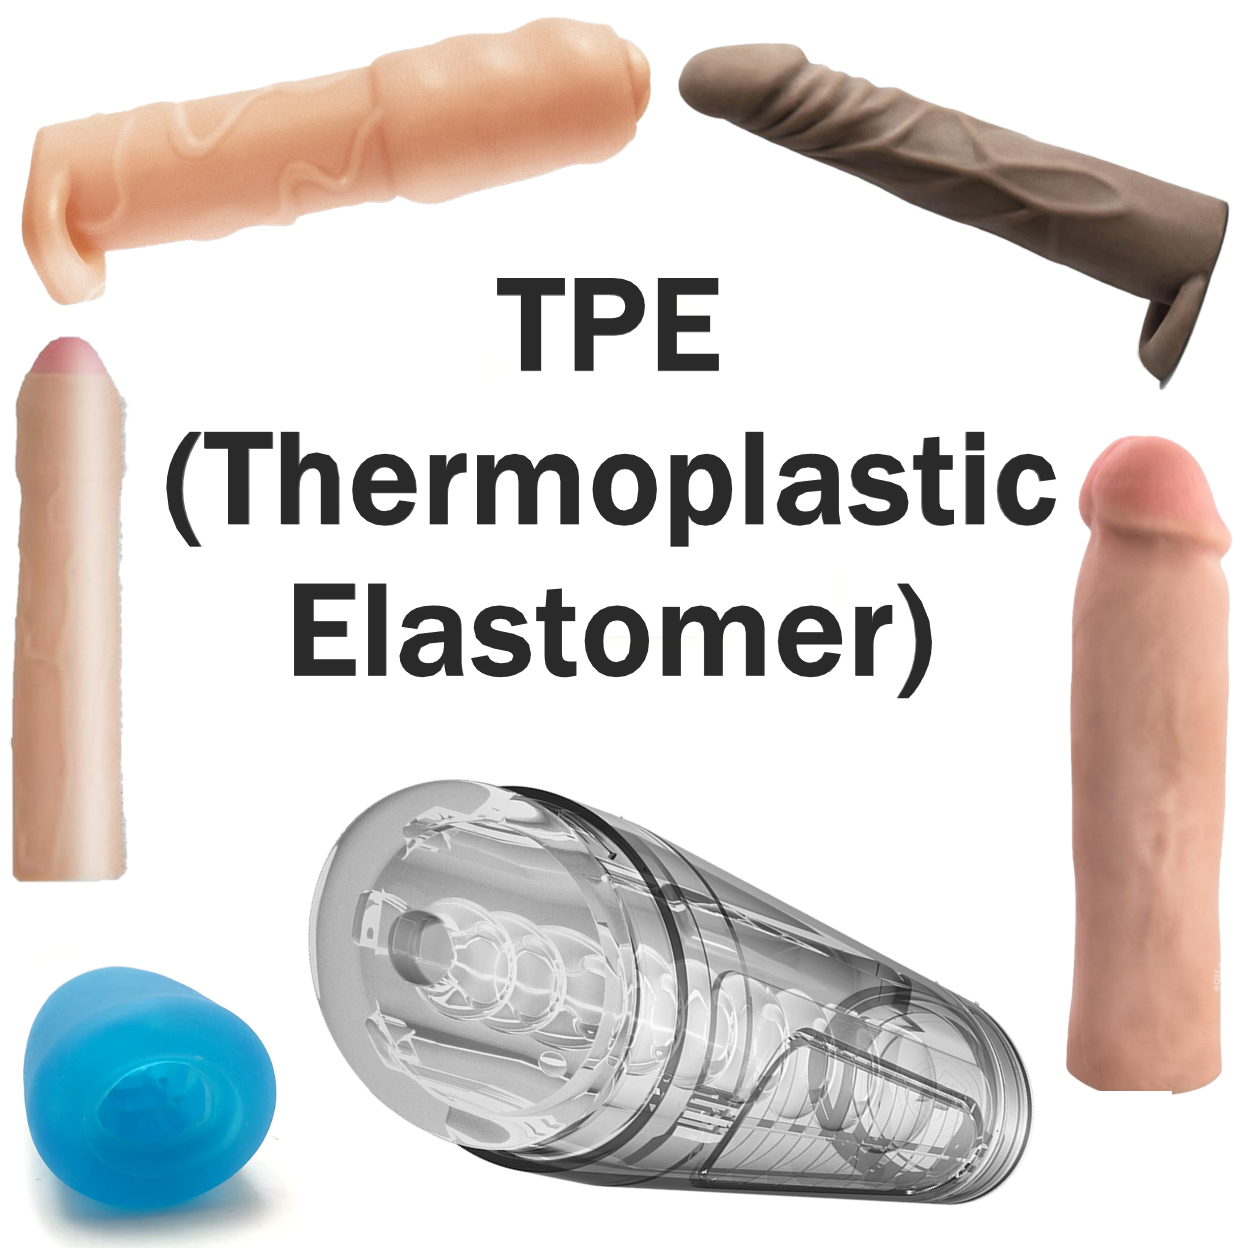 TPE - Thermoplastic Elastomer